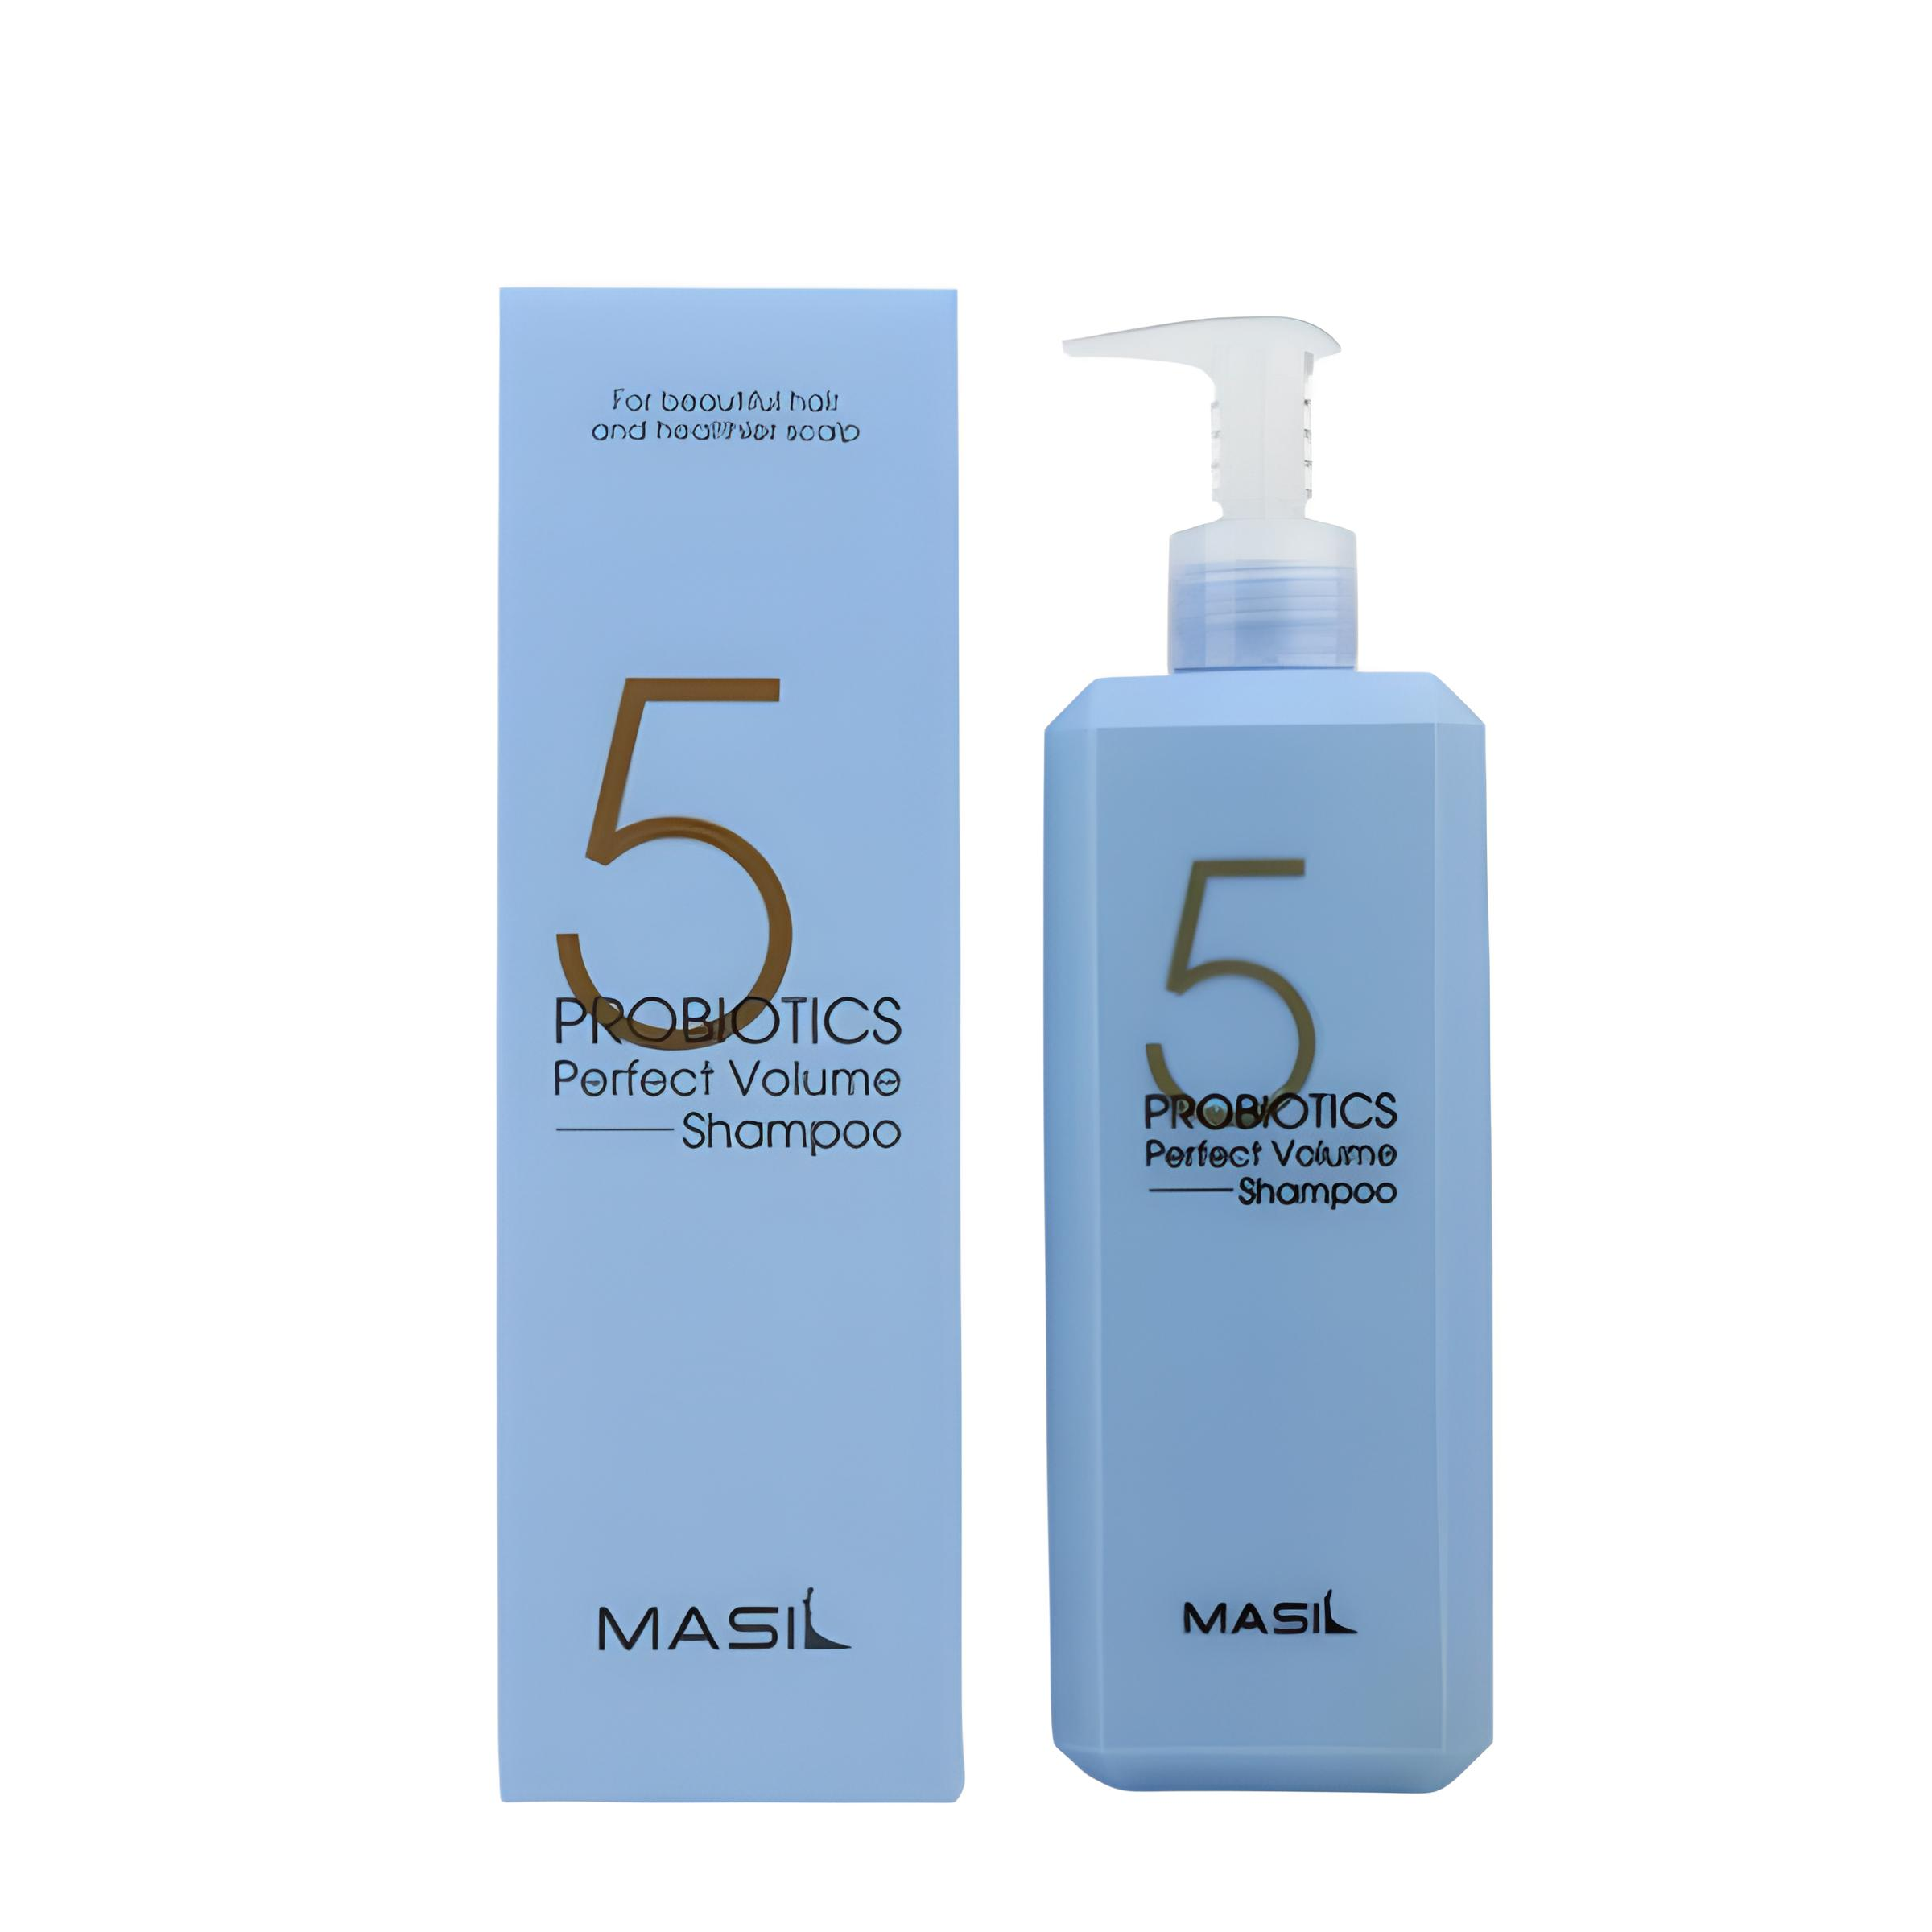 Шампунь Masil 5 Probiotics Perfect Volume Shampoo для об'єму волосся 500 мл